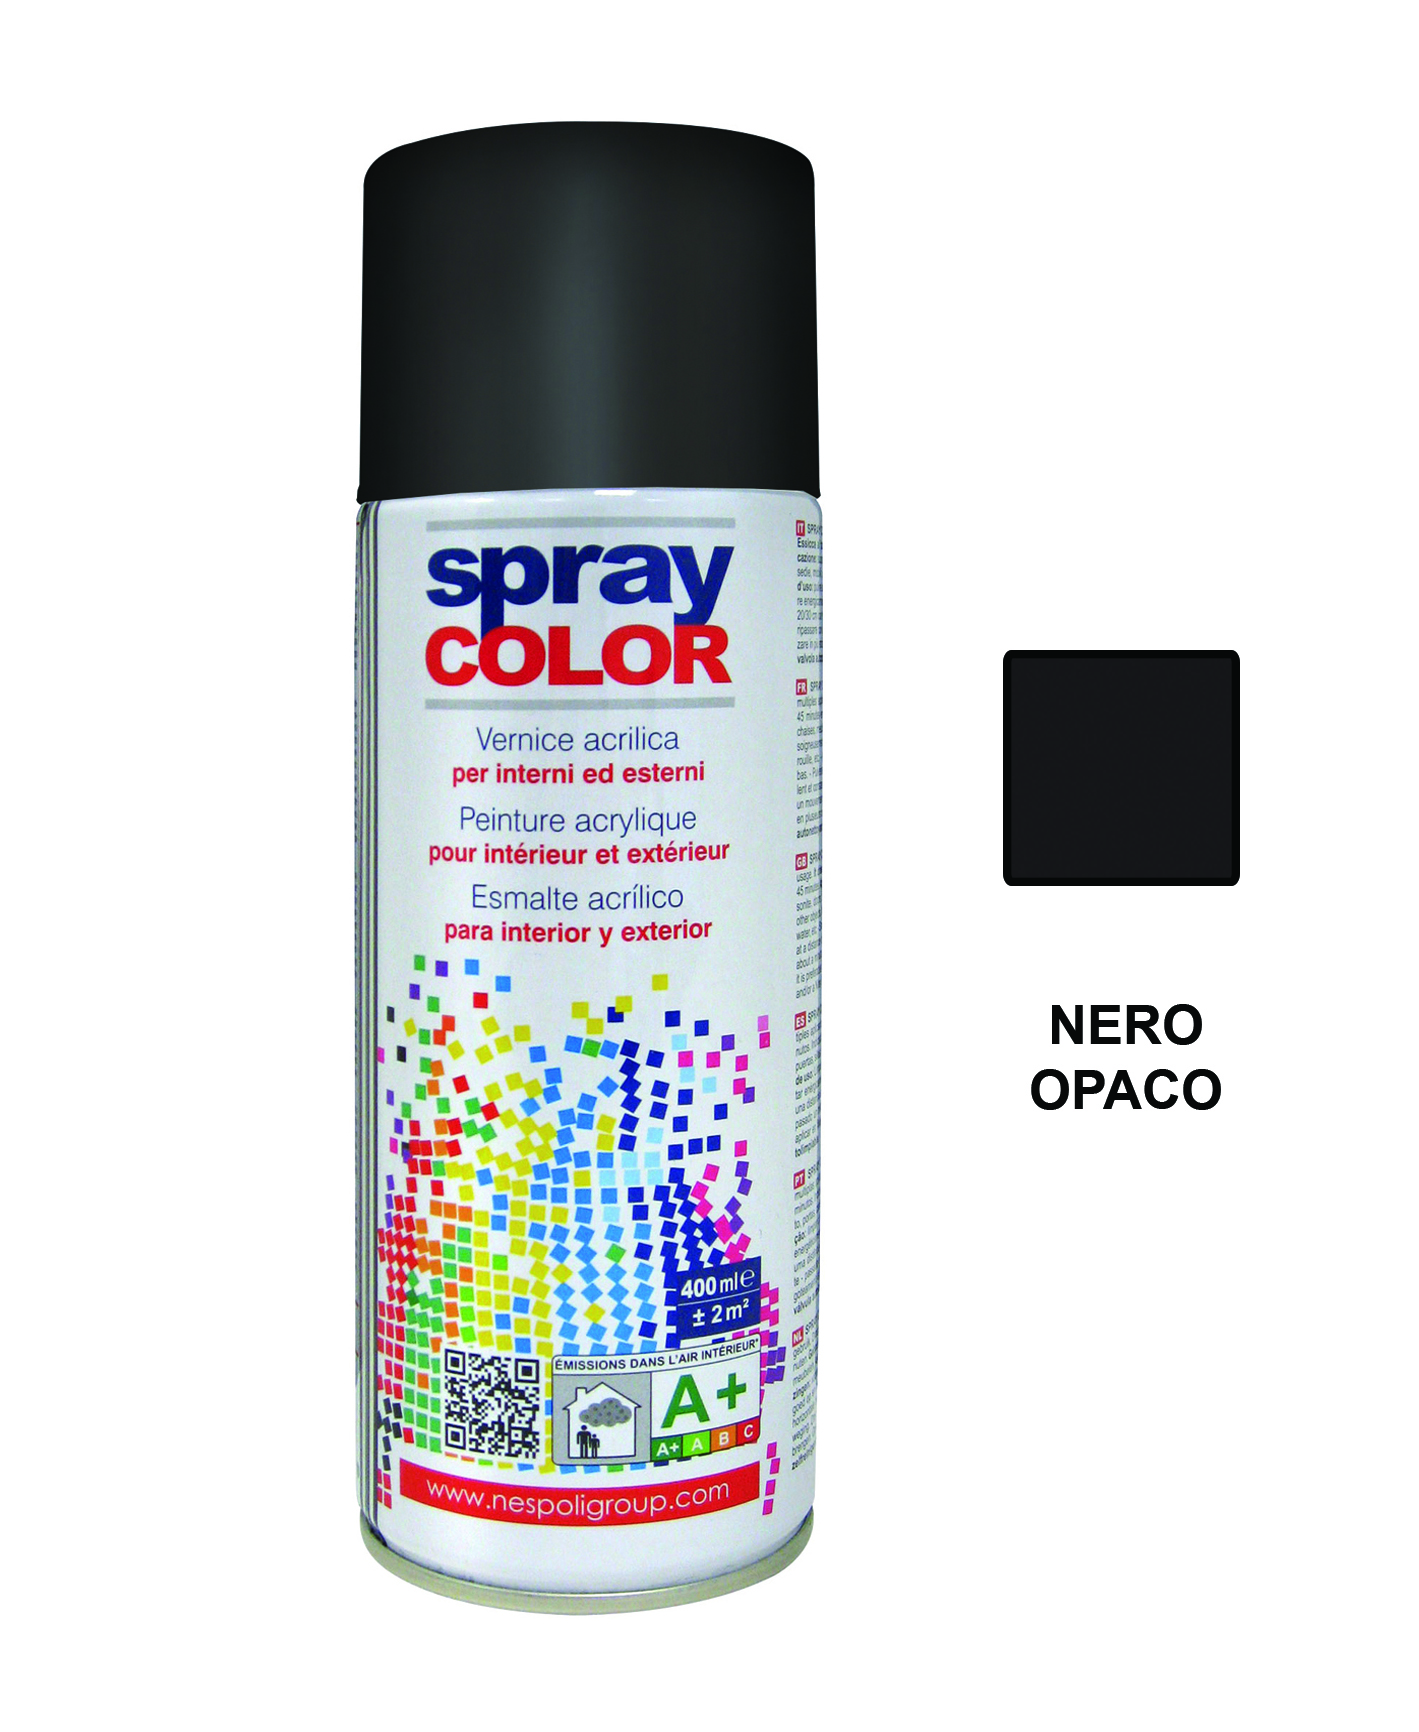 Spraycolor nero opaco 9005 400ml